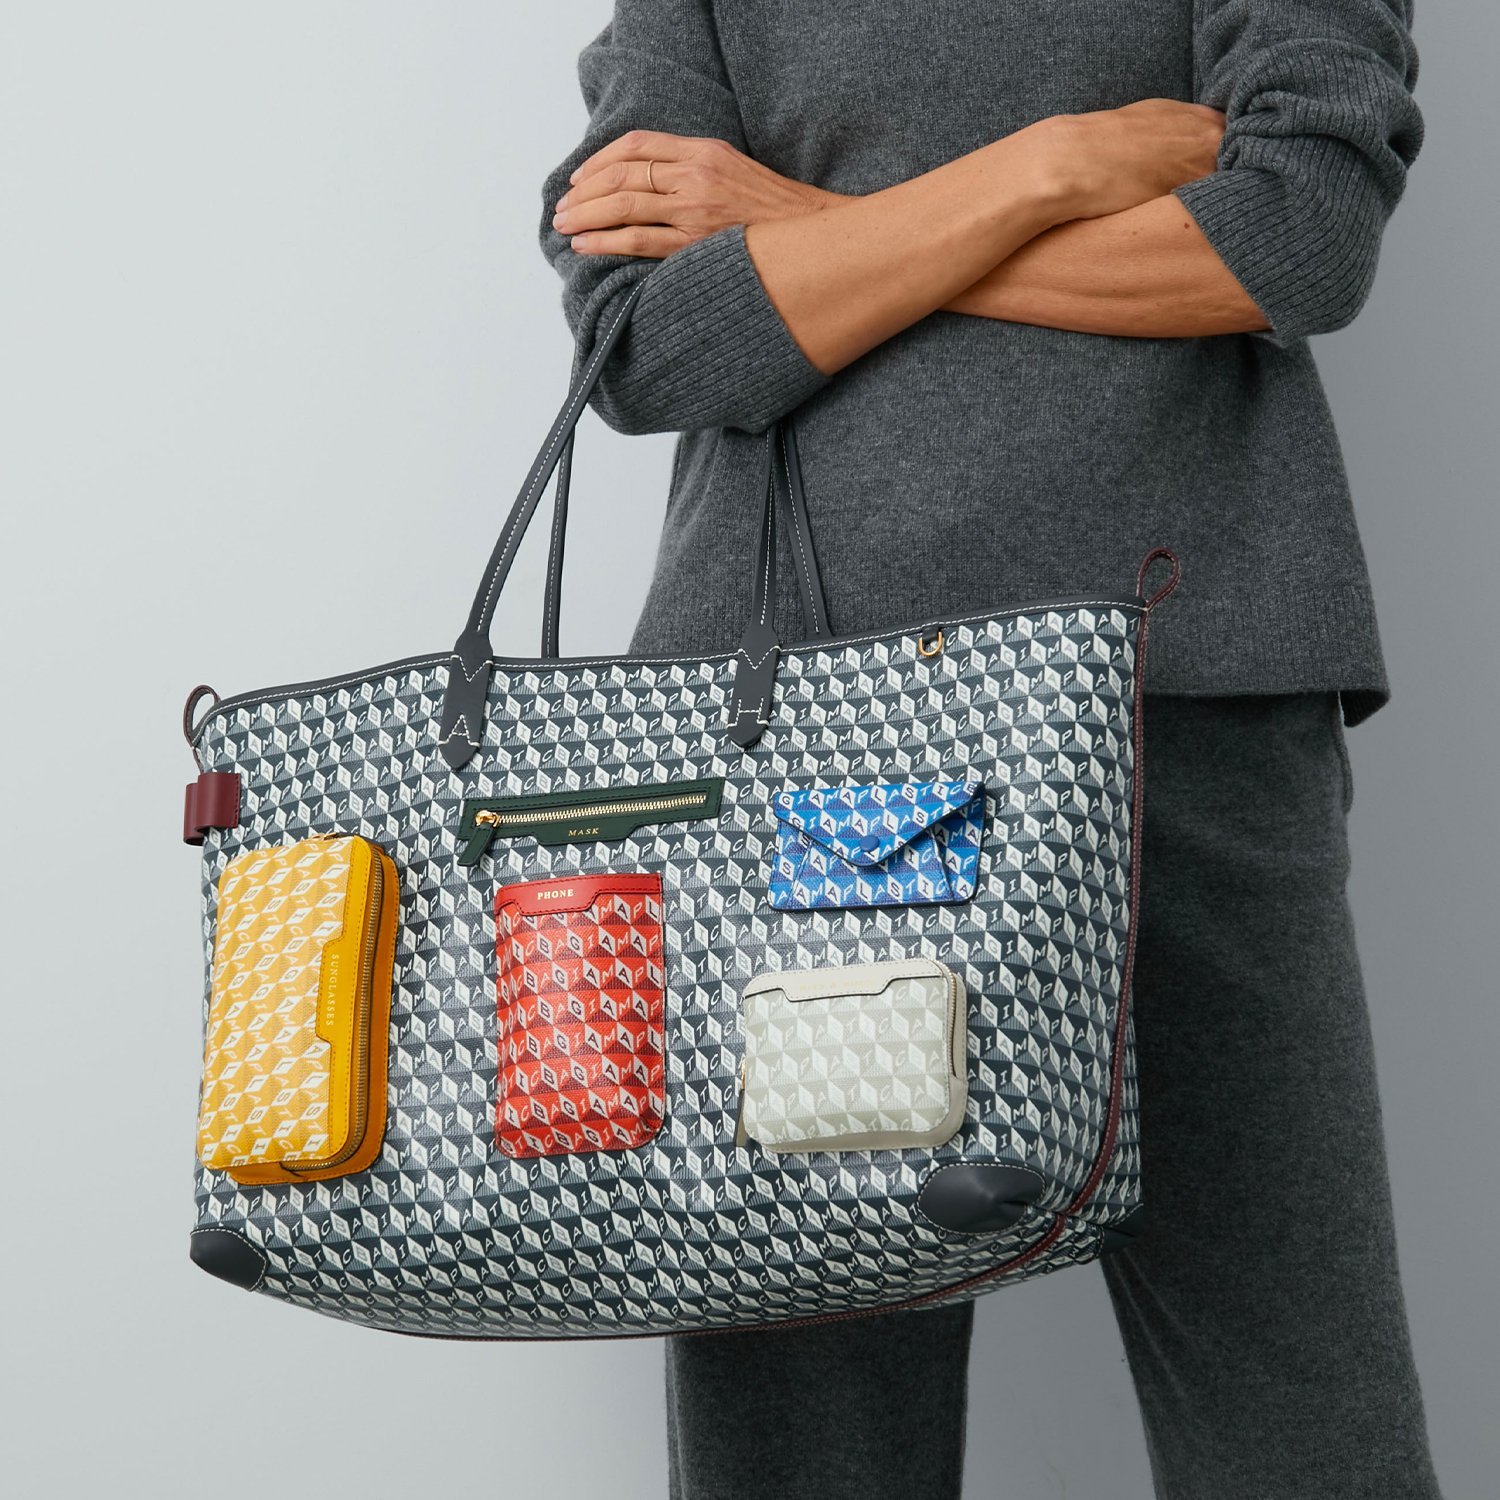 Anya Hindmarch: I AM A Plastic Bag | Milled